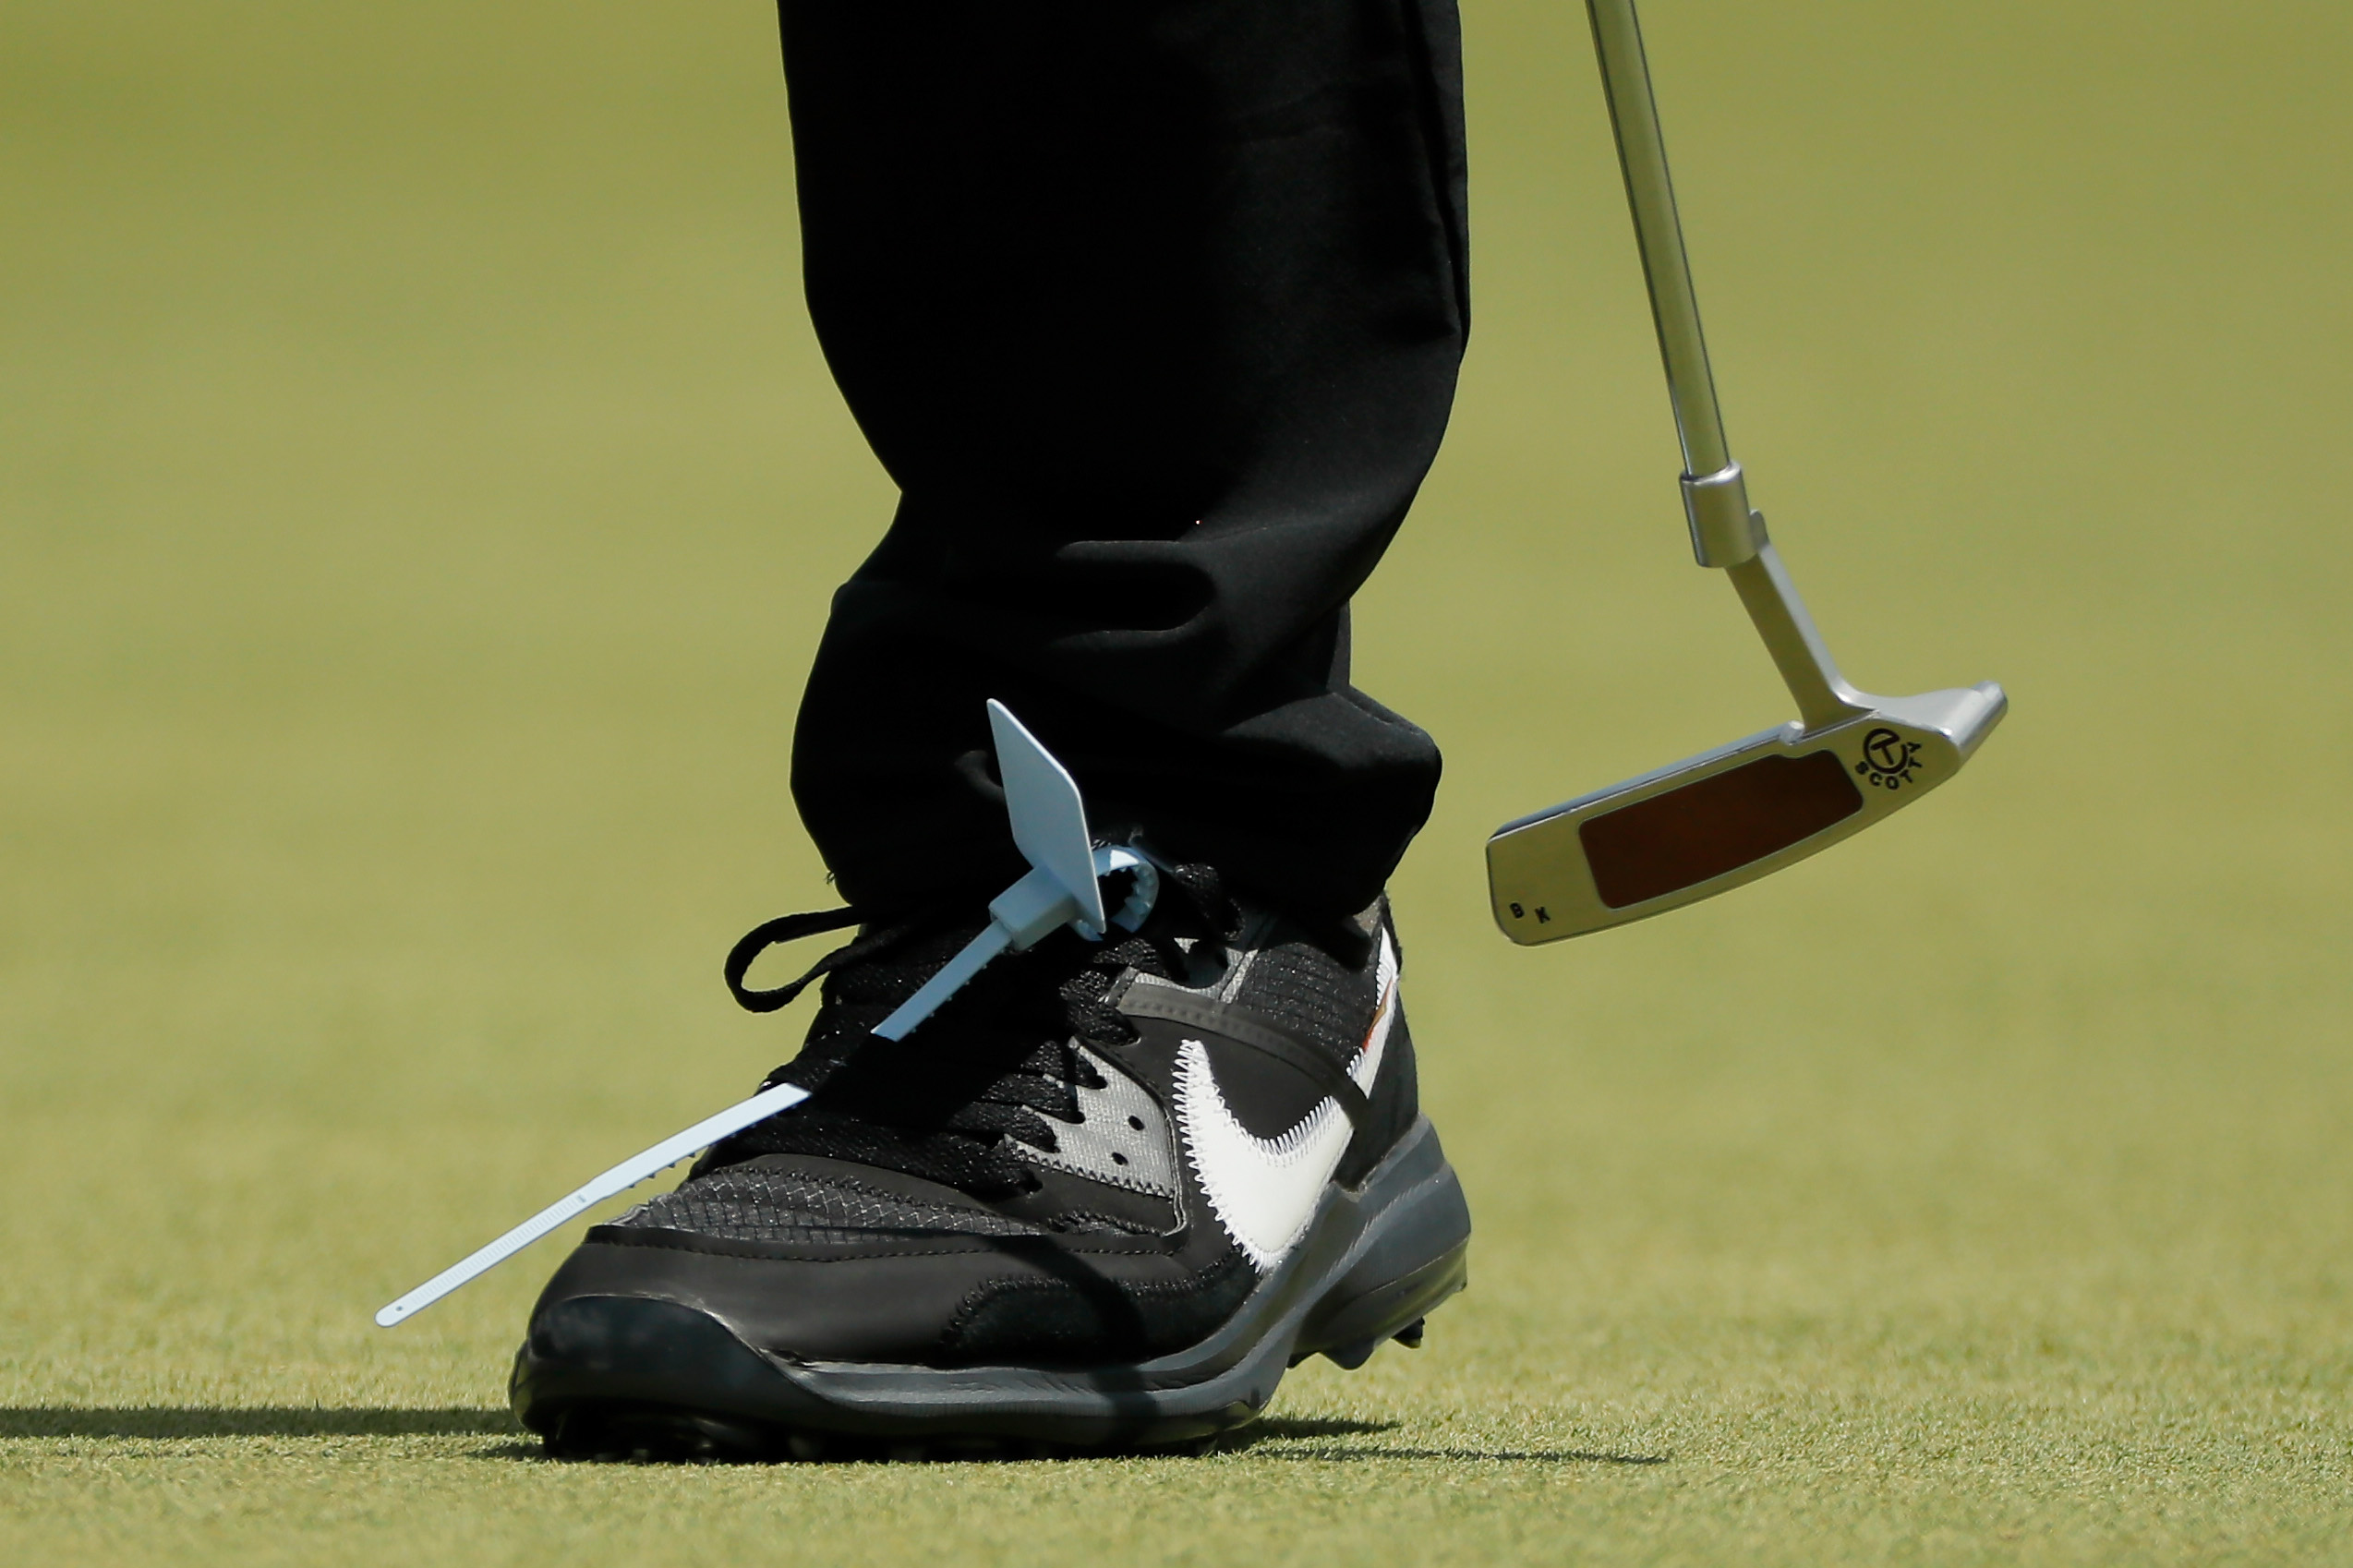 nike golf shoes worn by brooks koepka